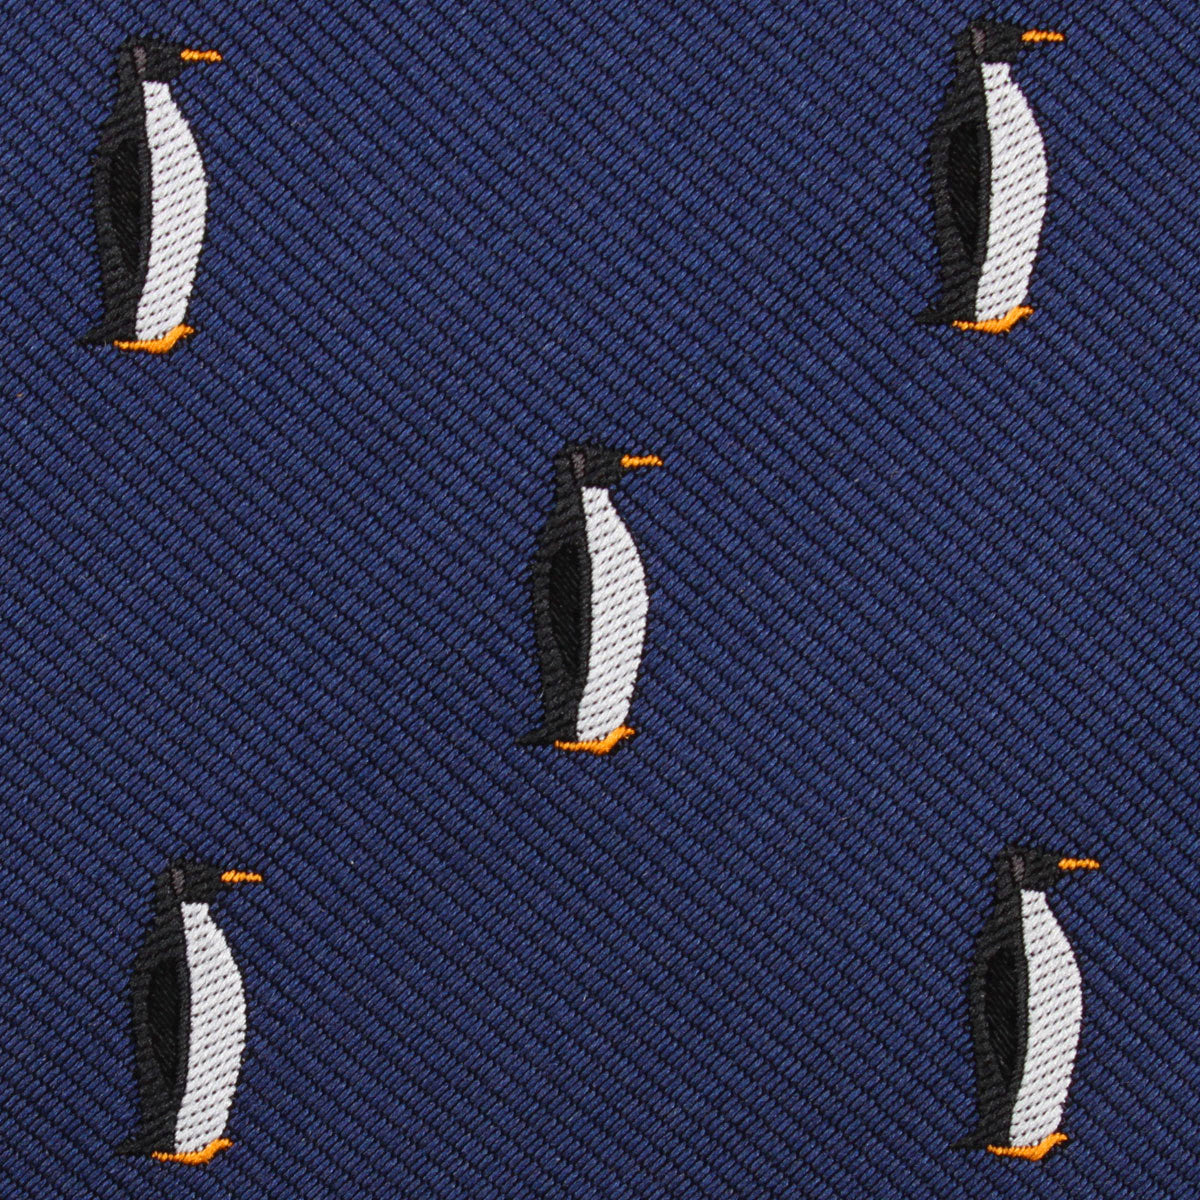 King Penguin Fabric Self Bowtie